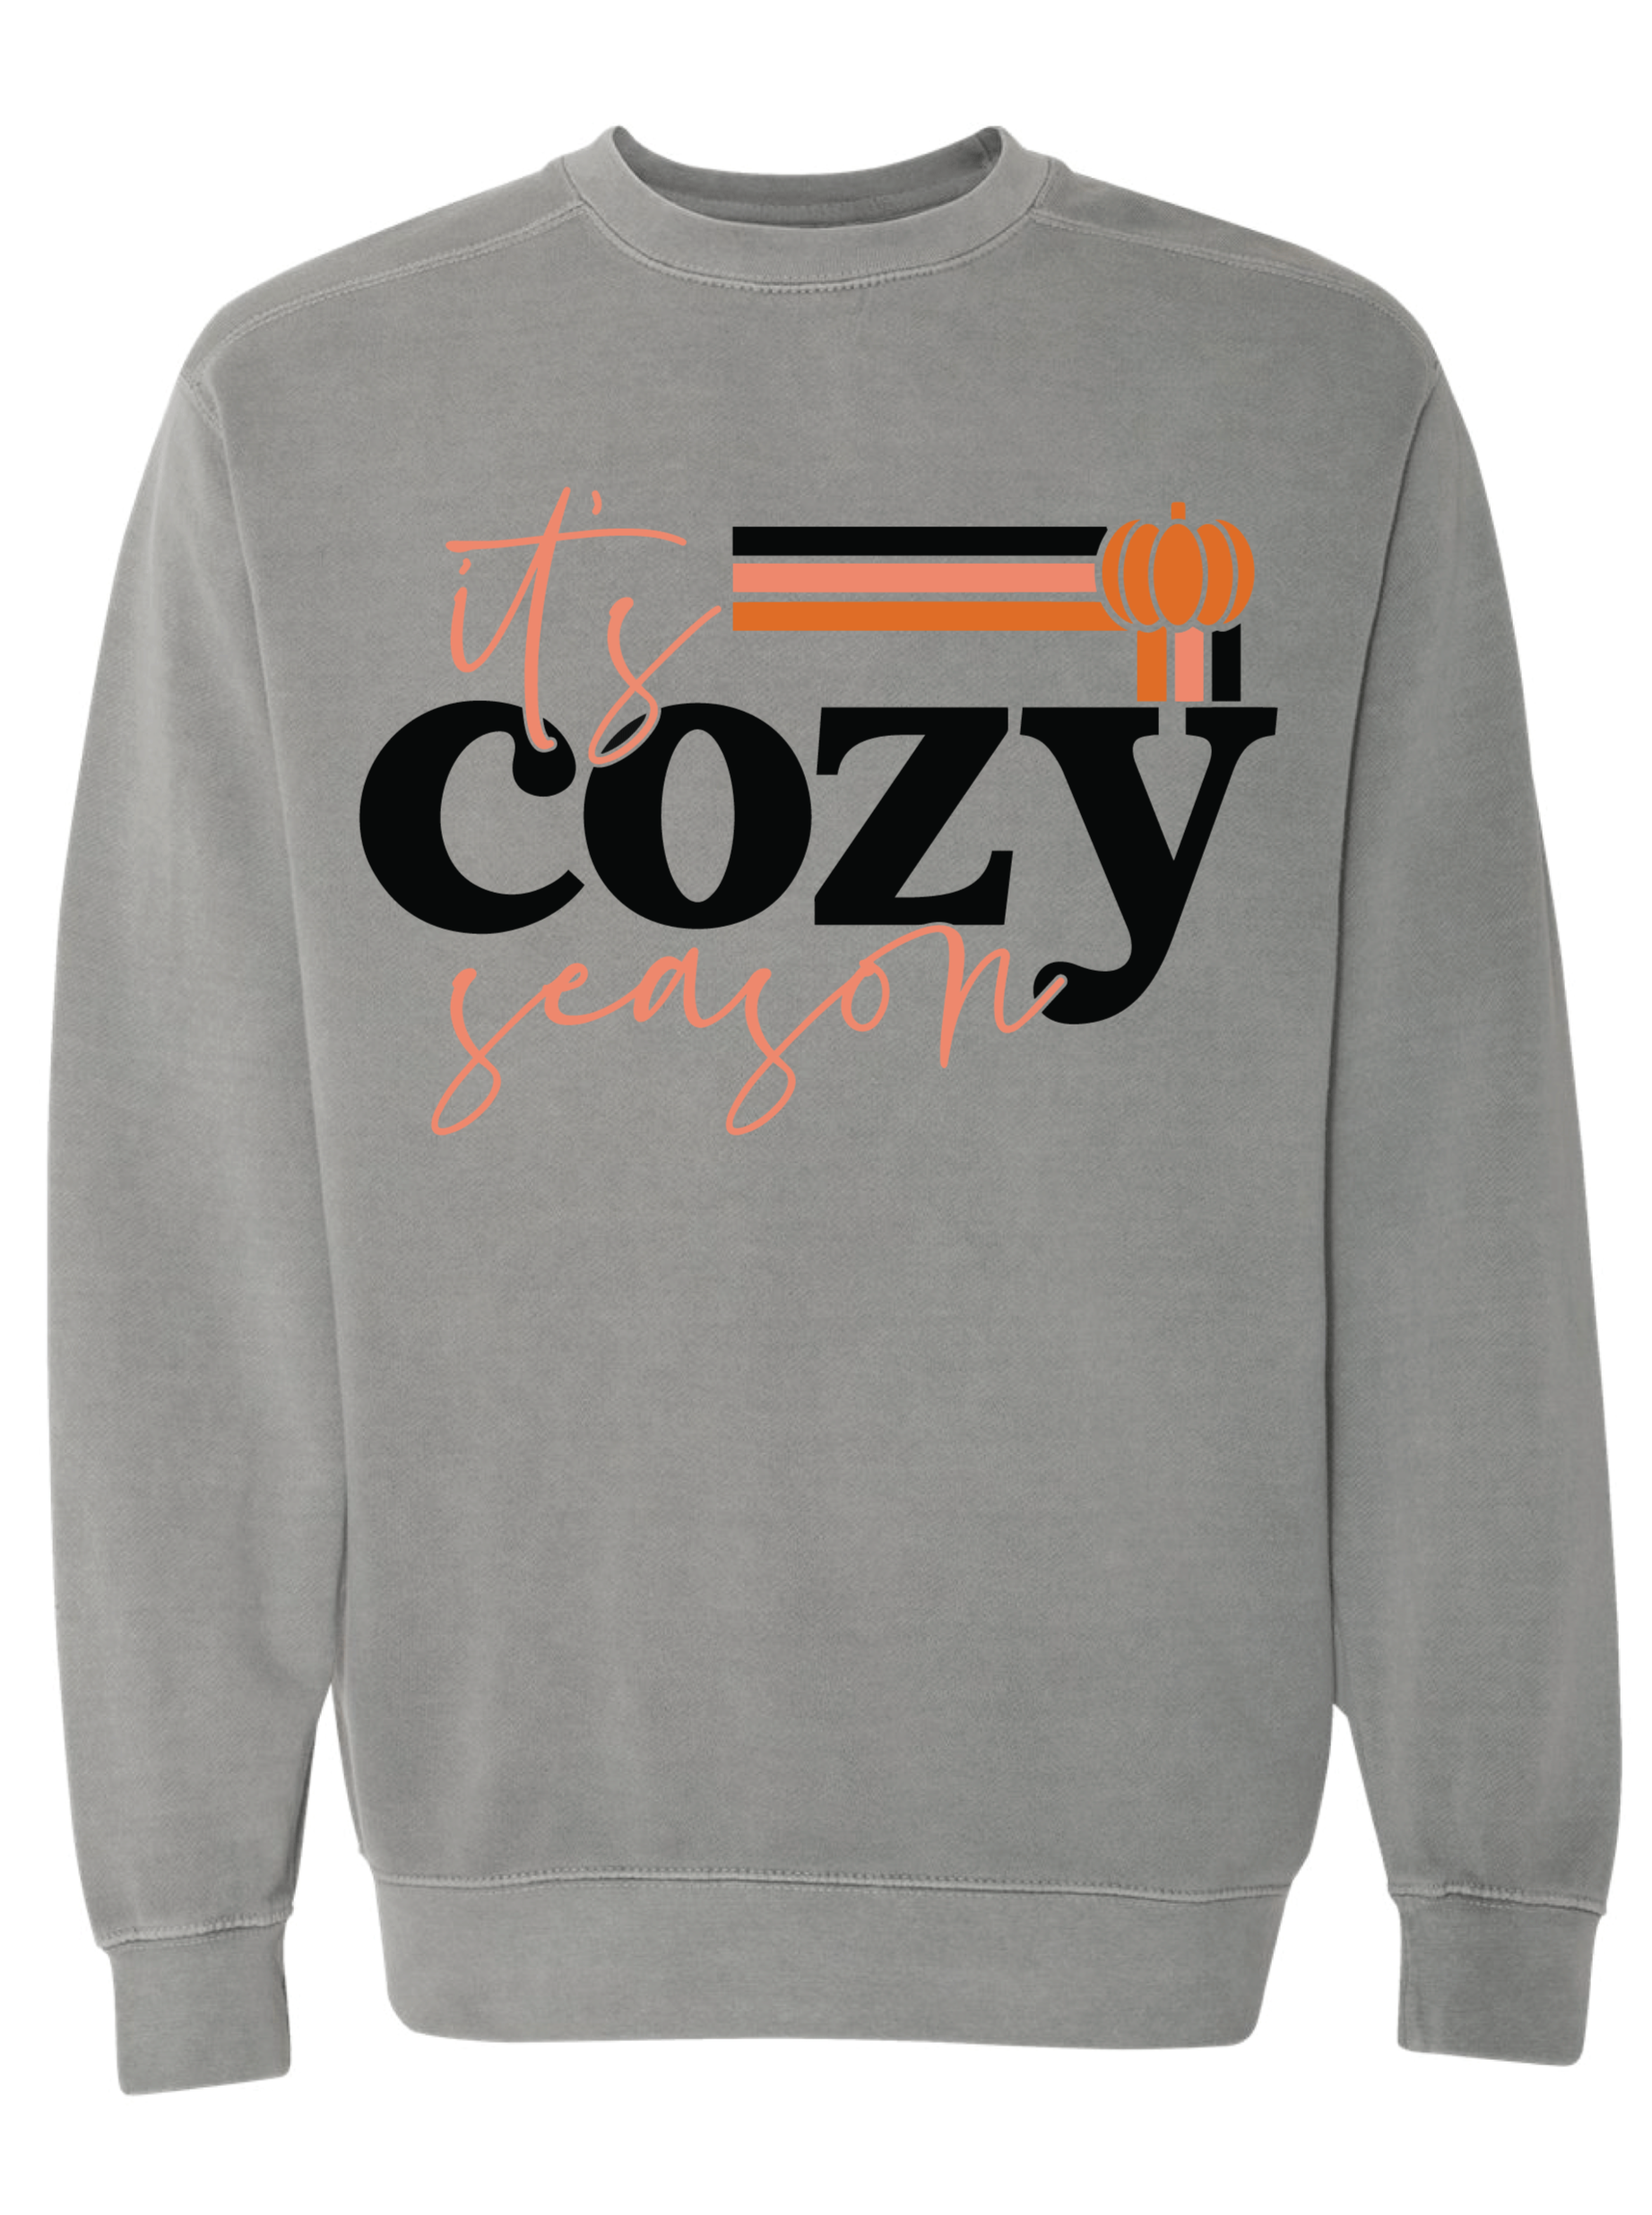 Cozy Season || Adult Unisex Pullover